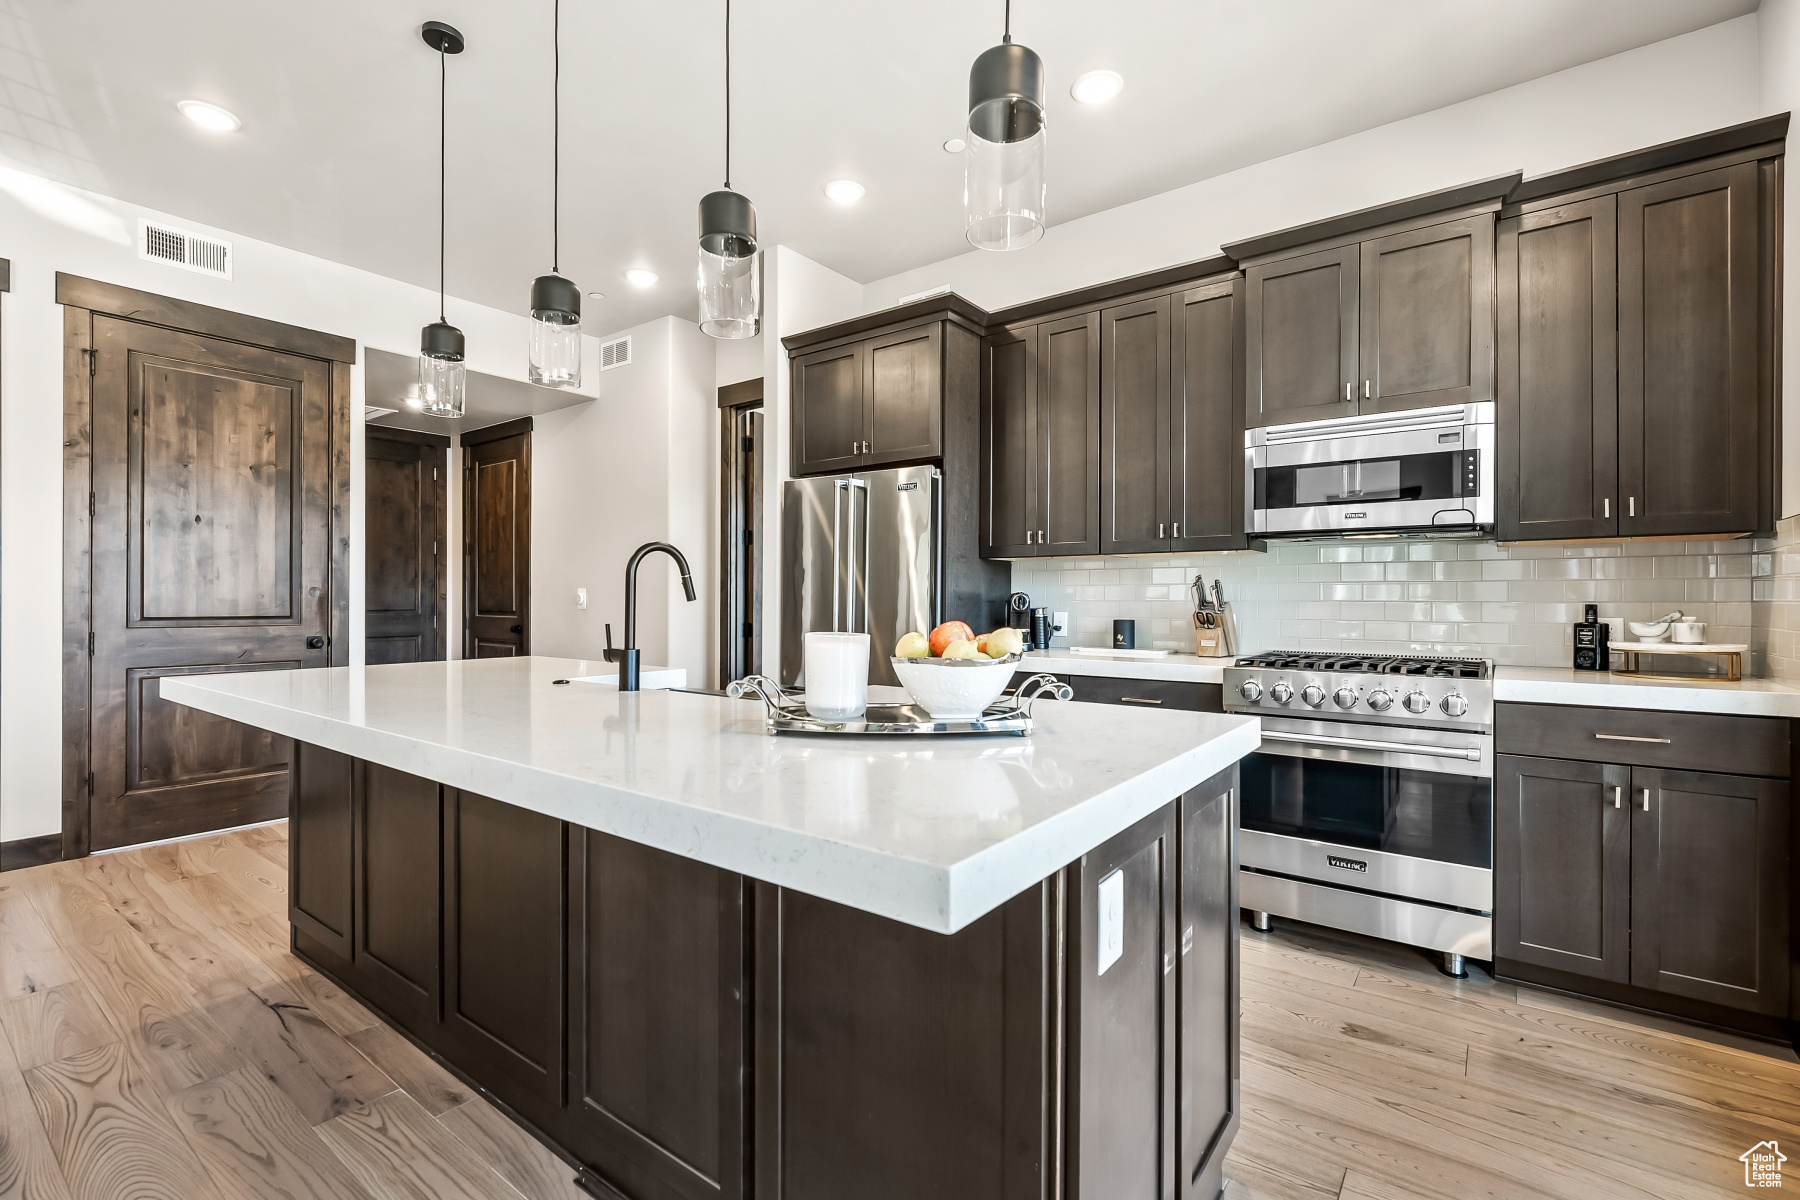 Kitchen featuring premium appliances, light hardwood / wood-style floors, tasteful backsplash, dark brown cabinets, and pendant lighting